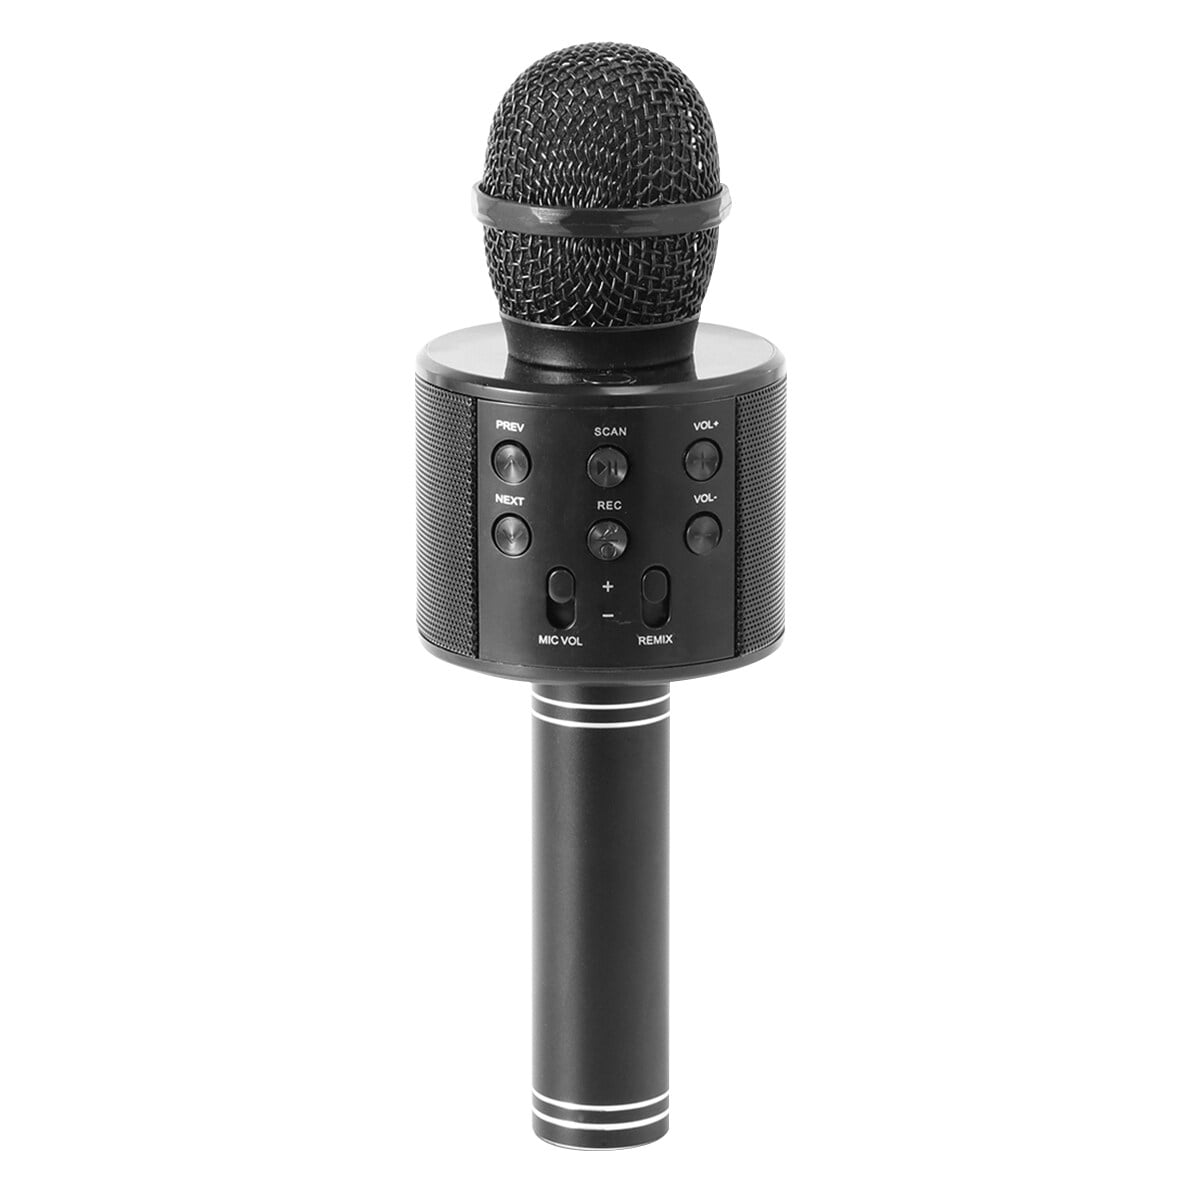 Wireless Karaoke Microphone for Kids, Portable Microphone US 